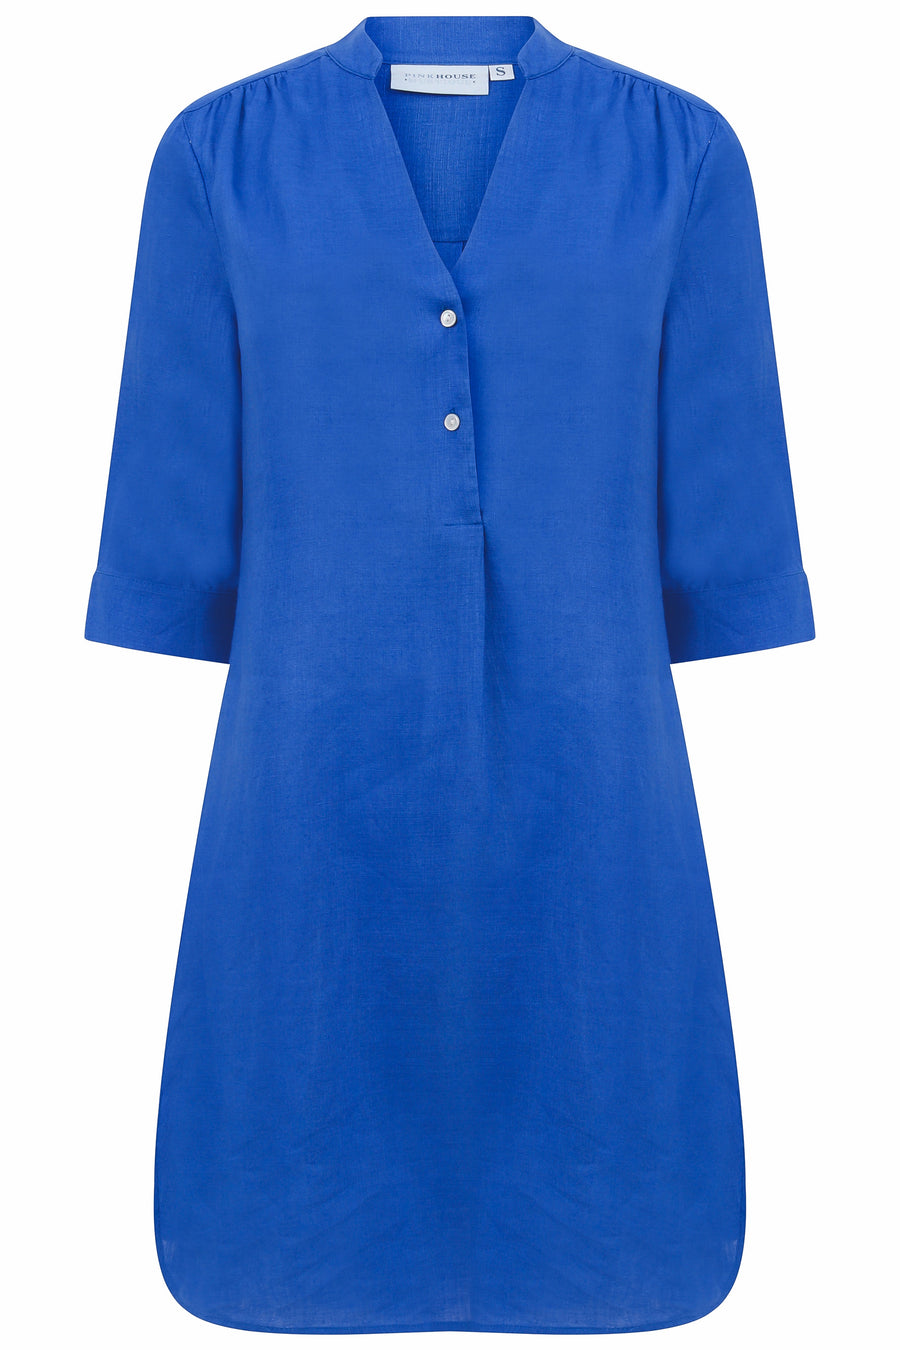 Linen Decima Dress in dazzling blue, designer Lotty B Mustique vacation wear